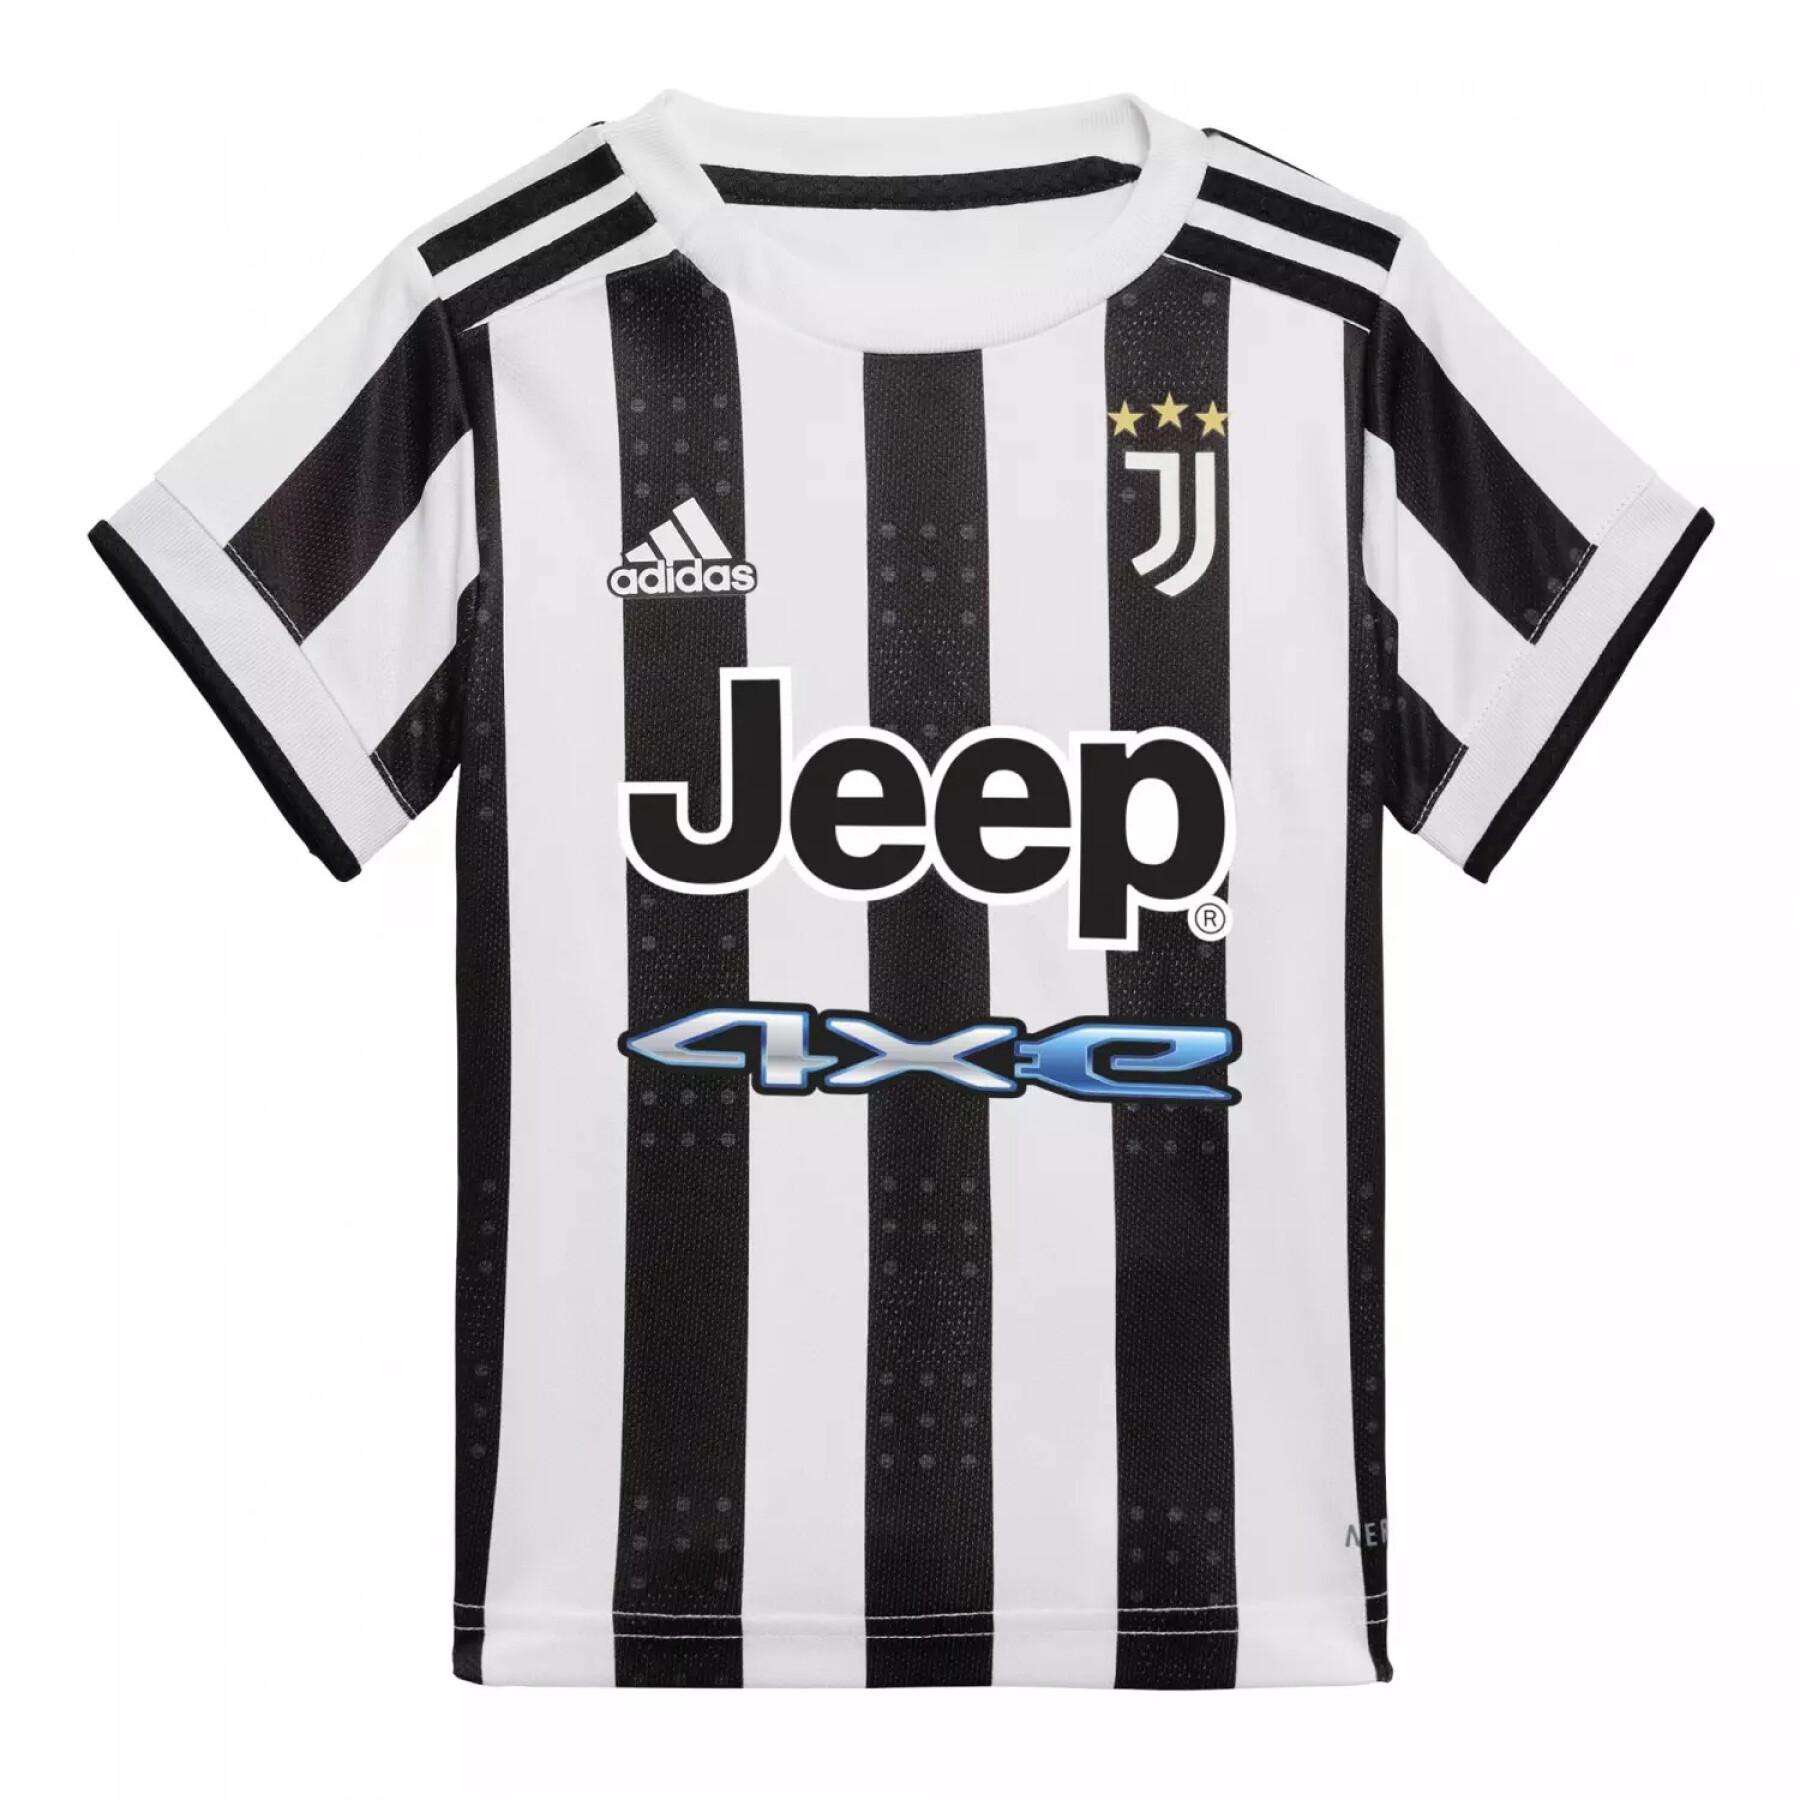 Kit do bebê em casa Juventus 2021/22